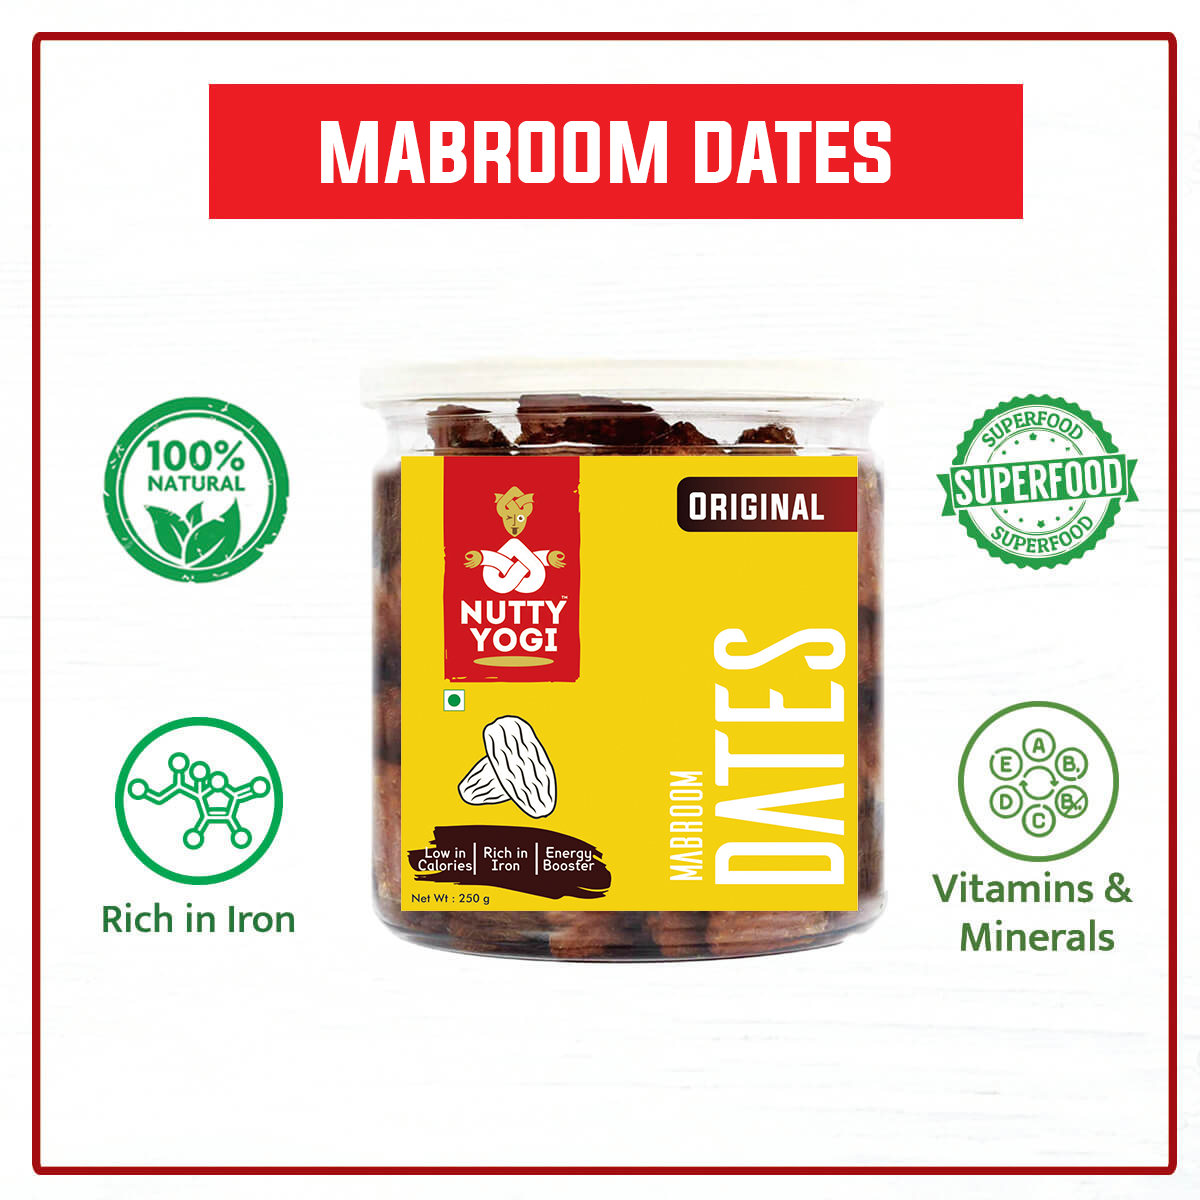 Nutty Yogi Original Mabroom Dates